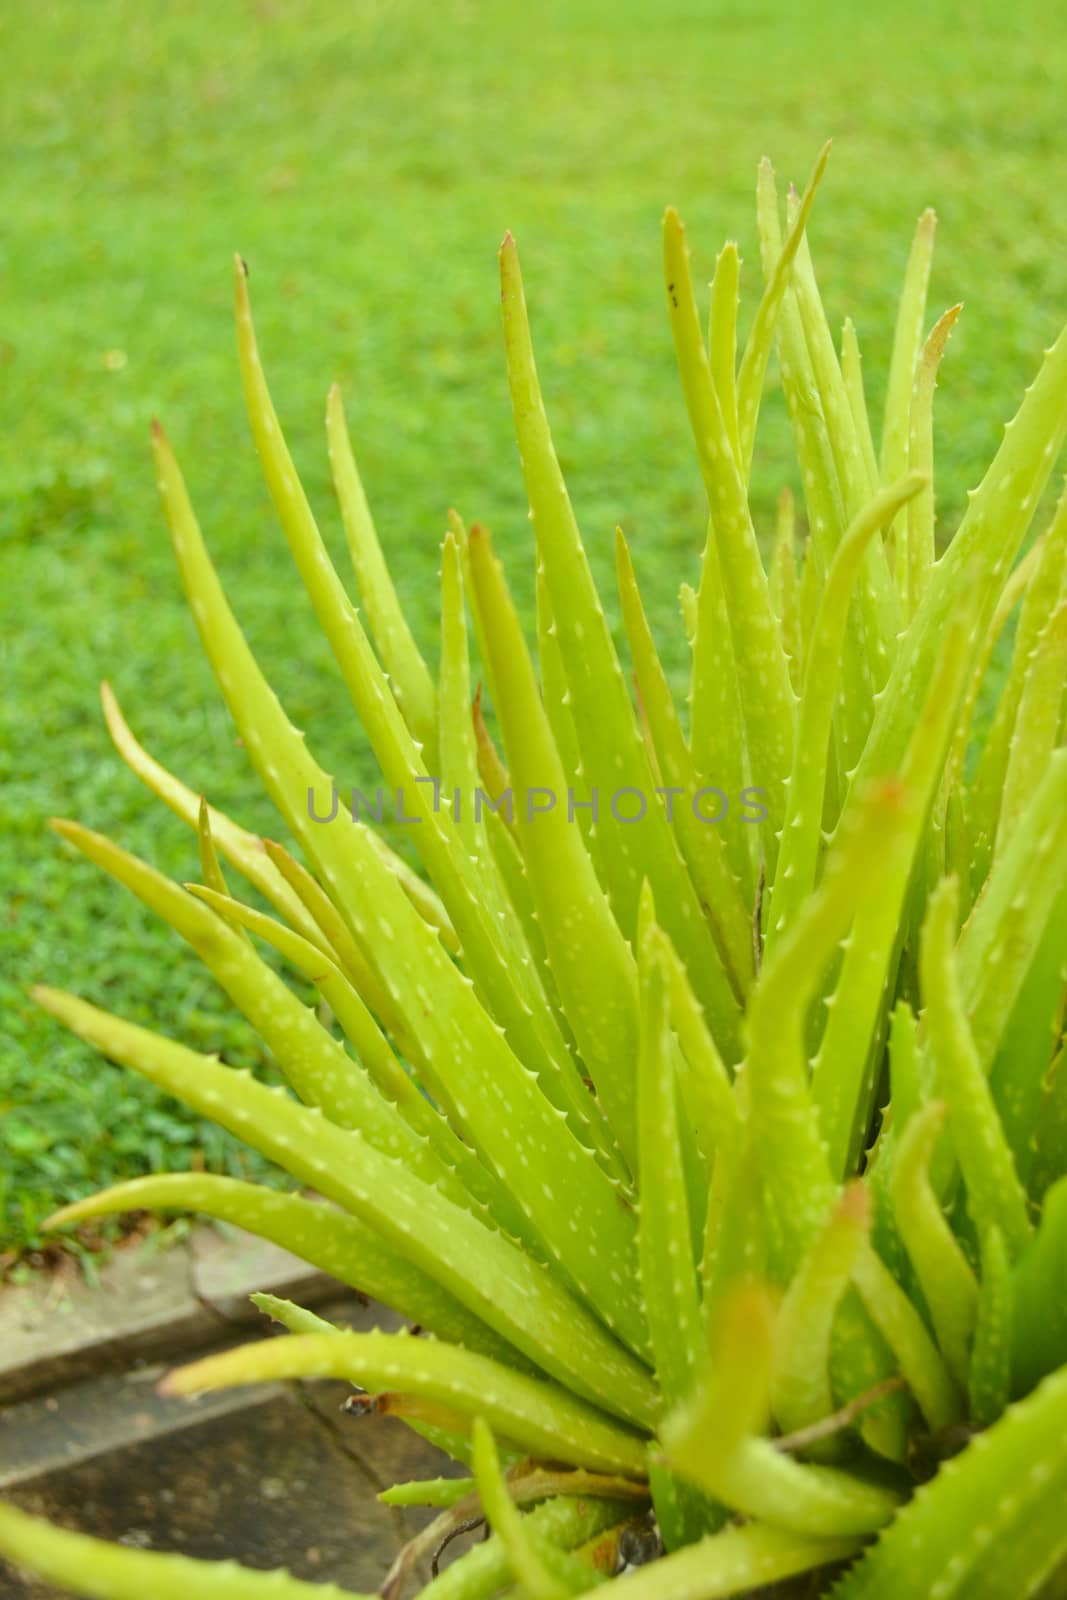 Green Aloe vera by apichart